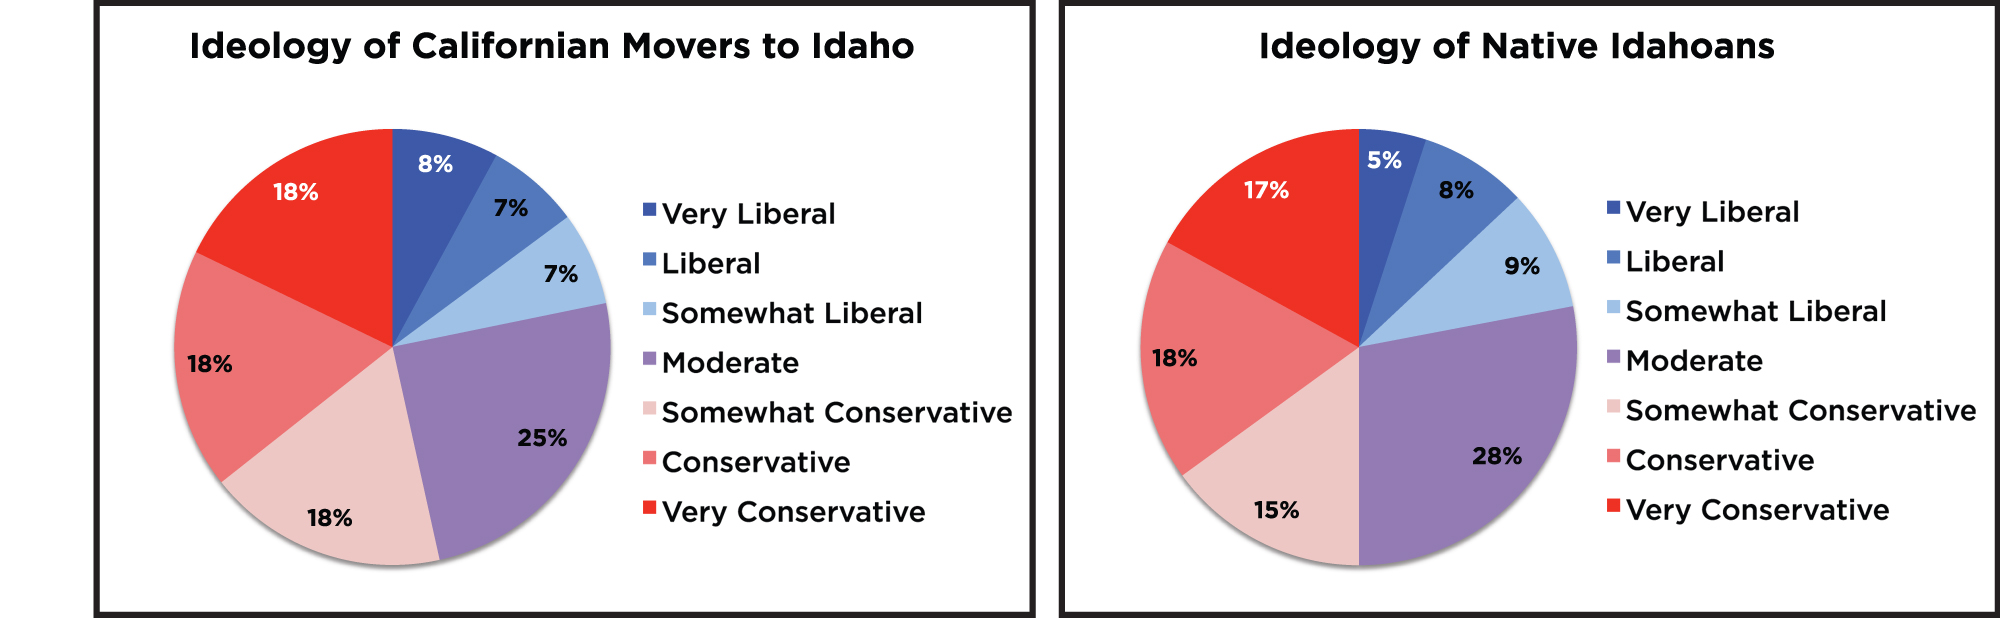 Ideology of Californian Movers vs Native Idahoans, pie chart